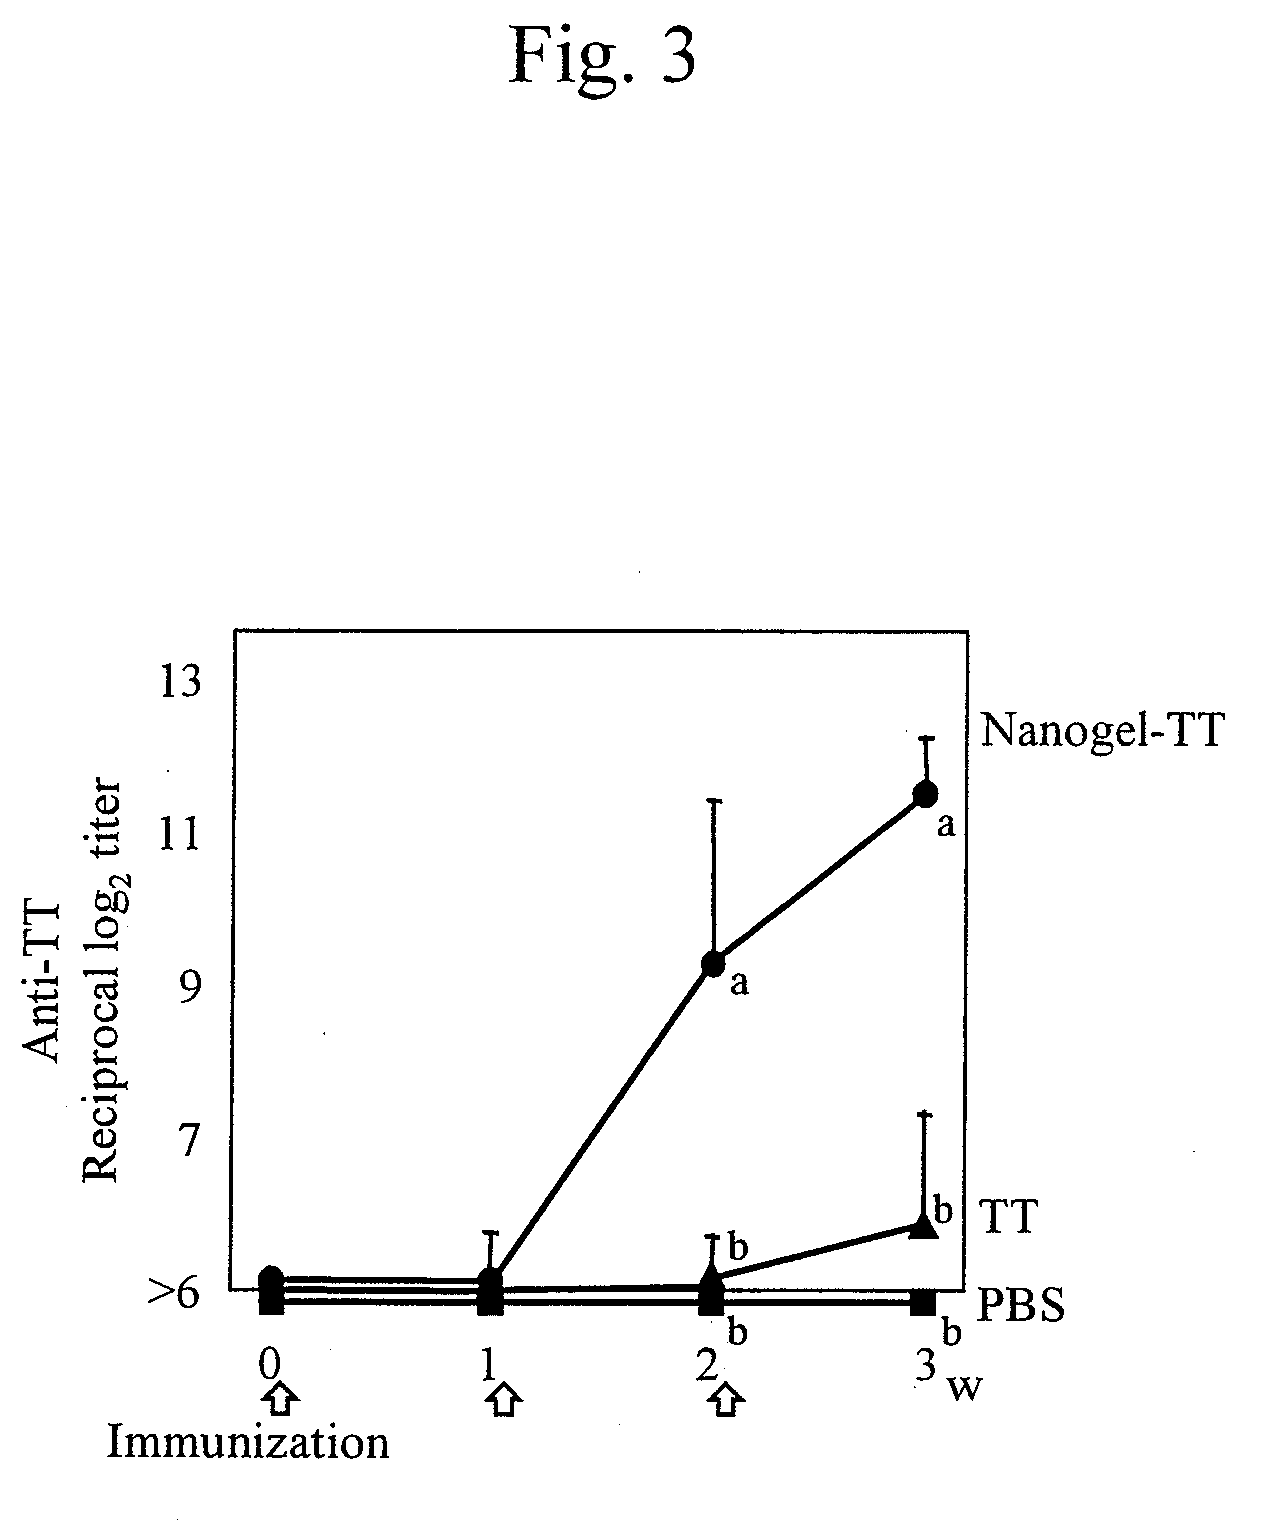 Mucosal vaccine using cationic nanogel